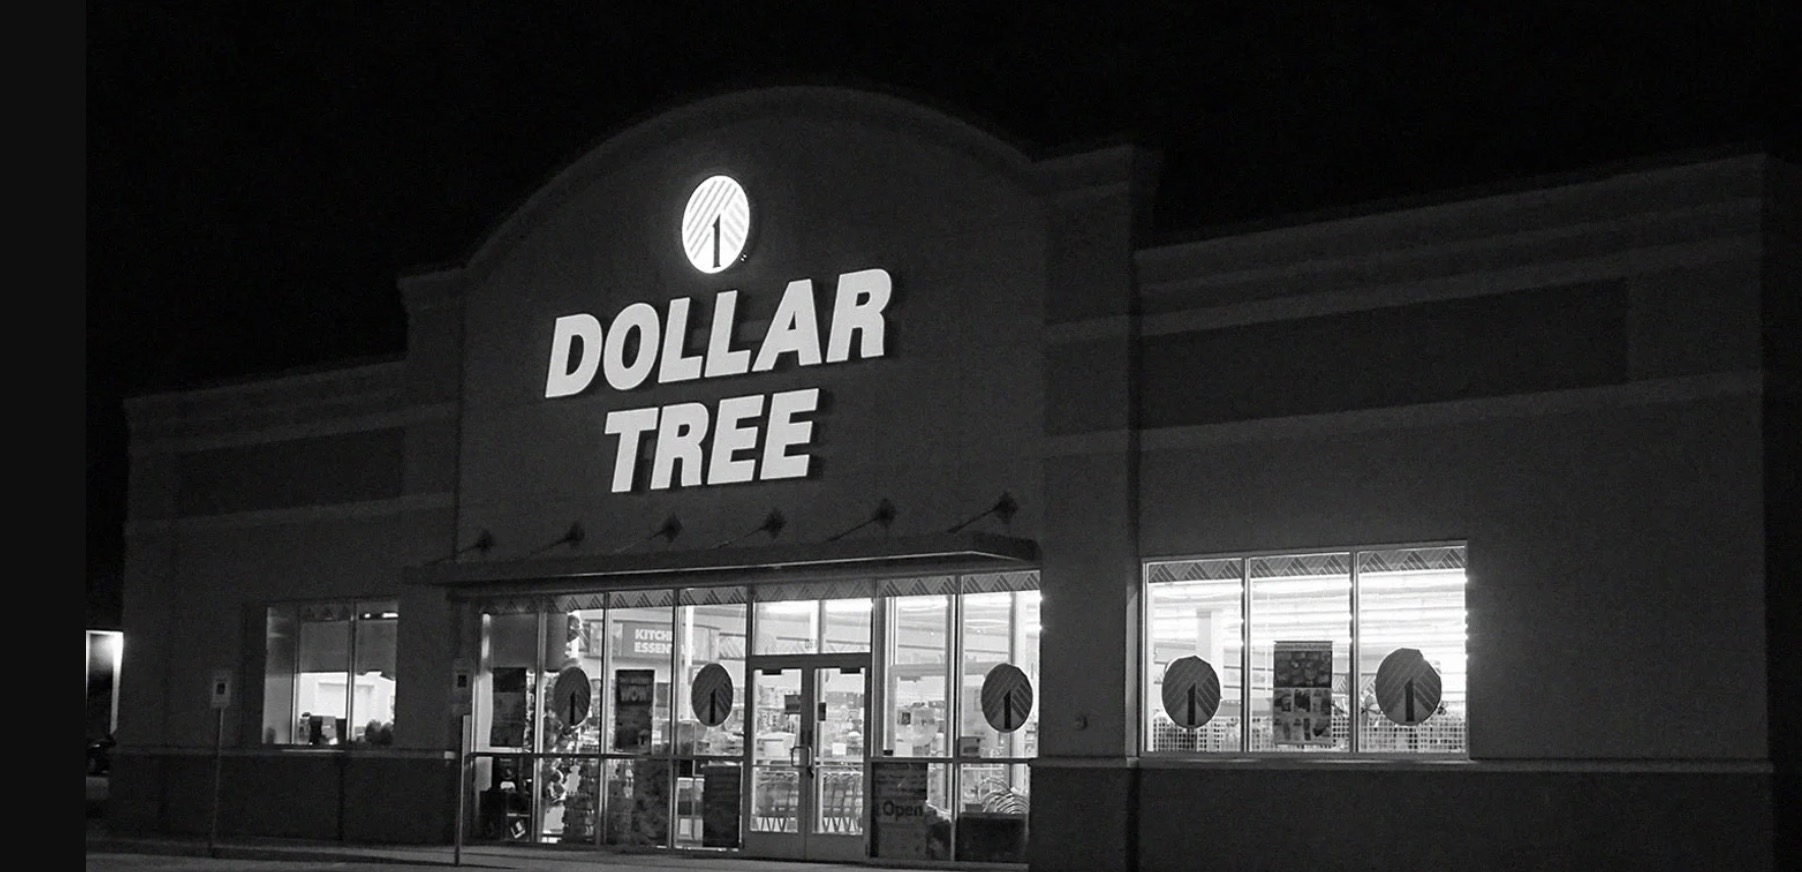 Dollar tree store